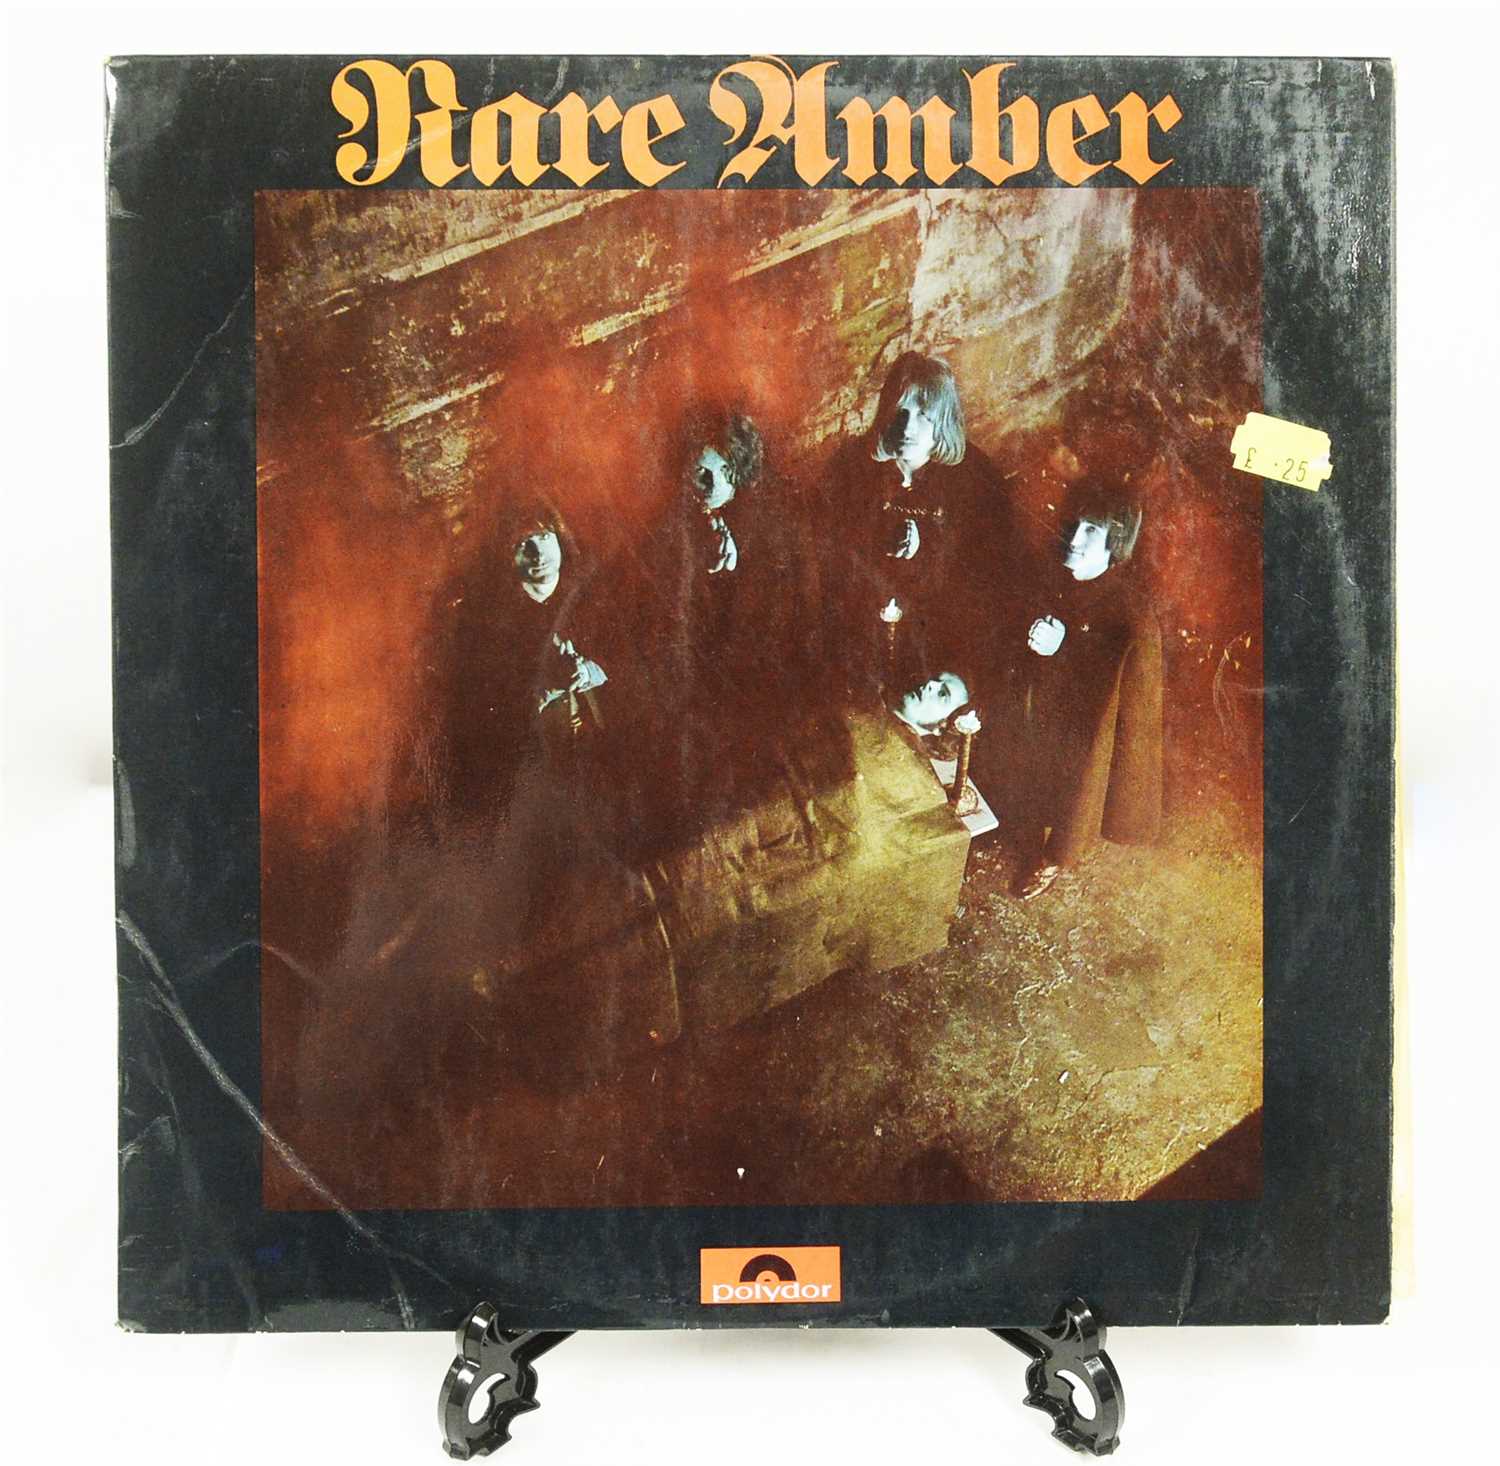 Lot 338 - Rare Amber LP